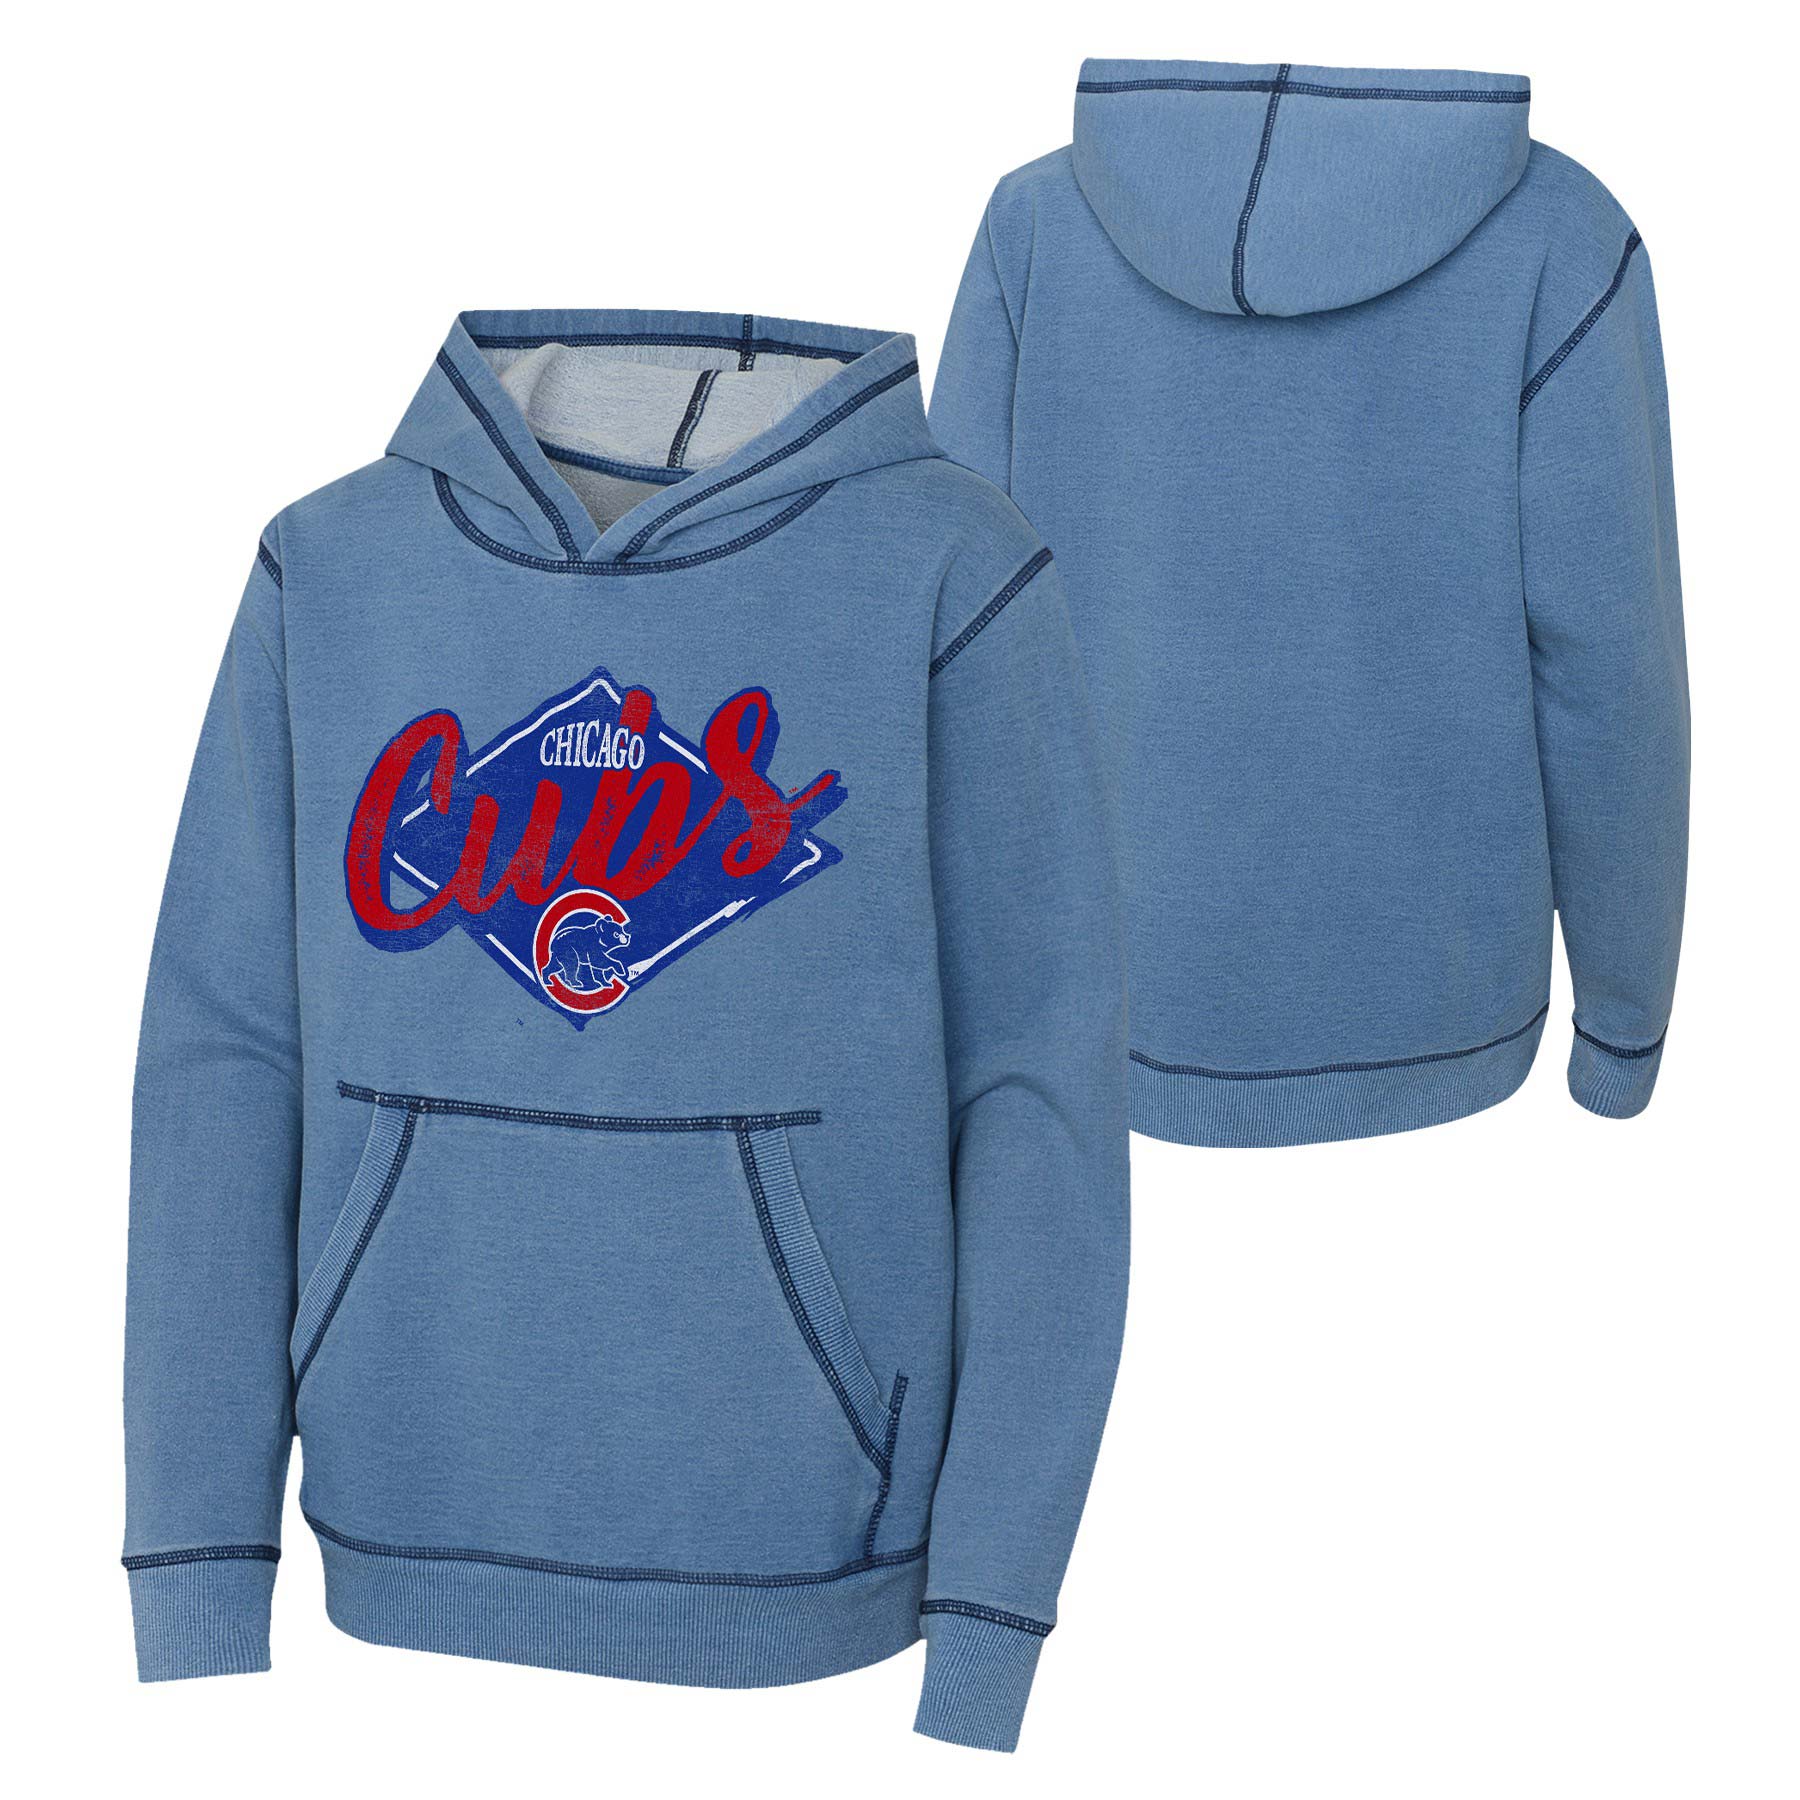 Outerstuff Chicago Cubs Preschool Gasoline Alley Hooded Sweatshirt Large (7)